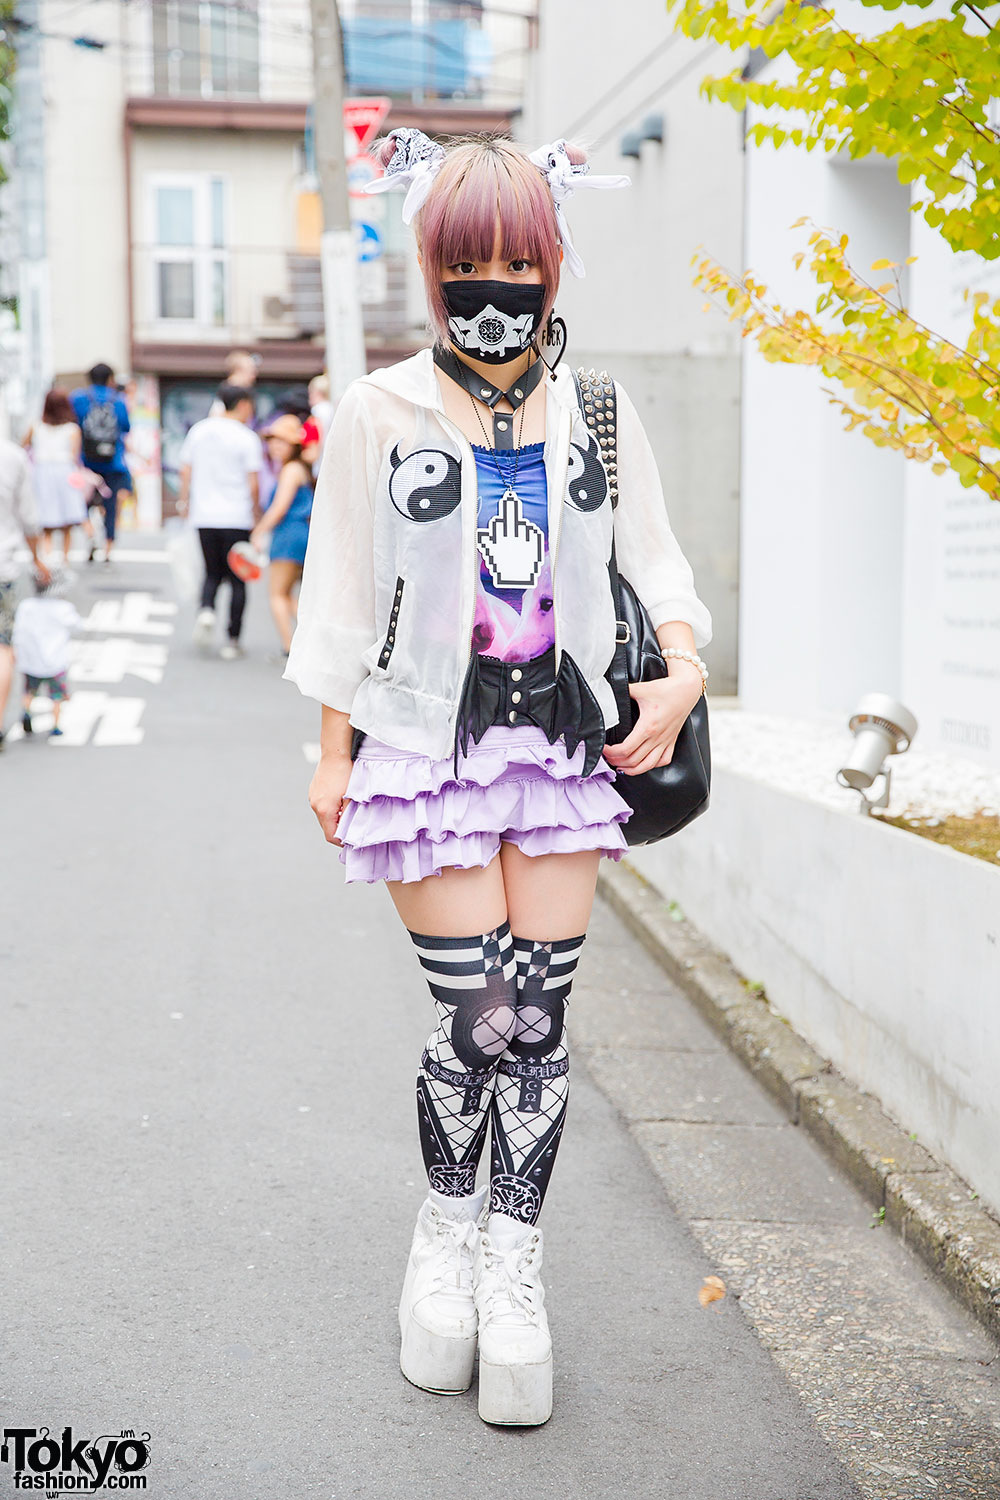 QissQill Designer w/ Lilac Hair, Winged Belt, Harness, Mask & Yin-Yang Bag in Harajuku